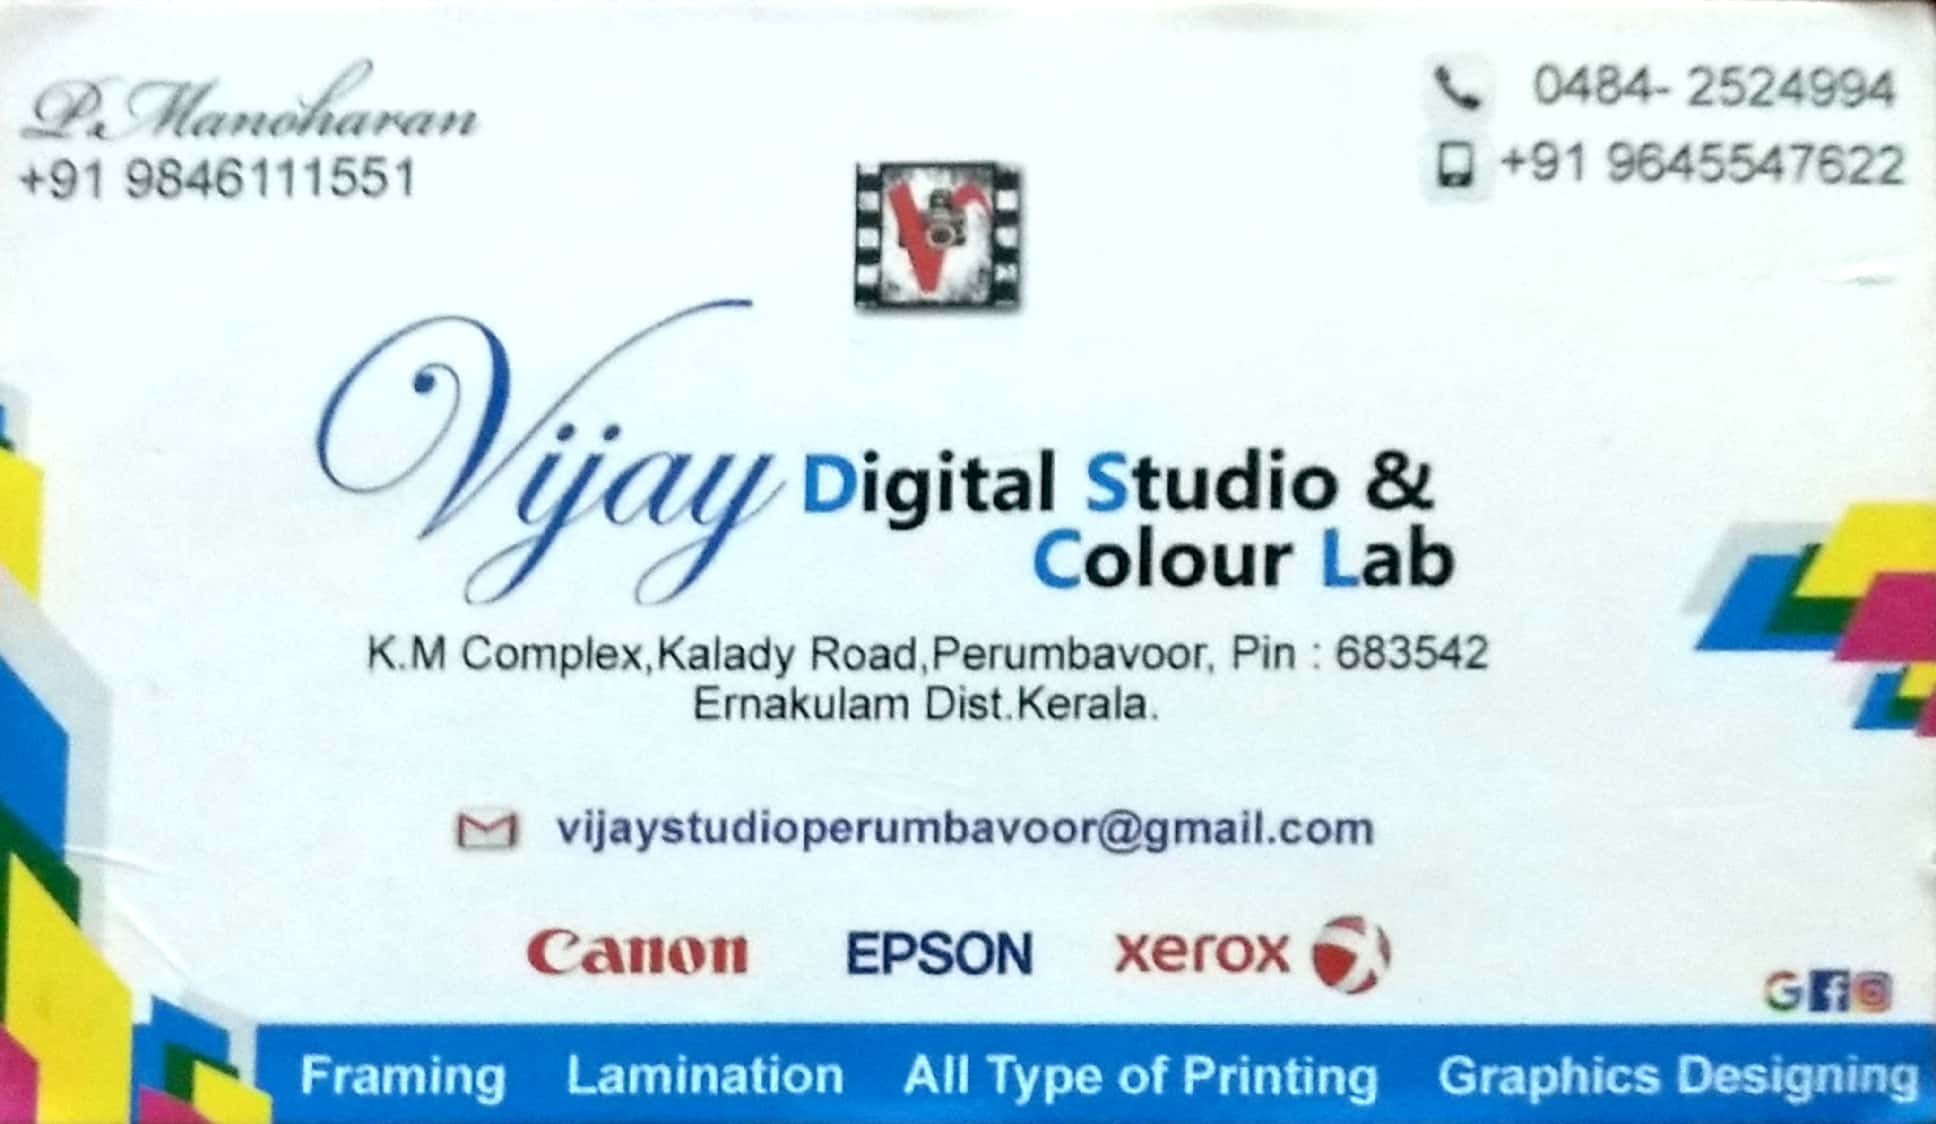 VIJAY Digital Studio & Colour Lab, STUDIO & VIDEO EDITING,  service in Thrippunithura, Ernakulam